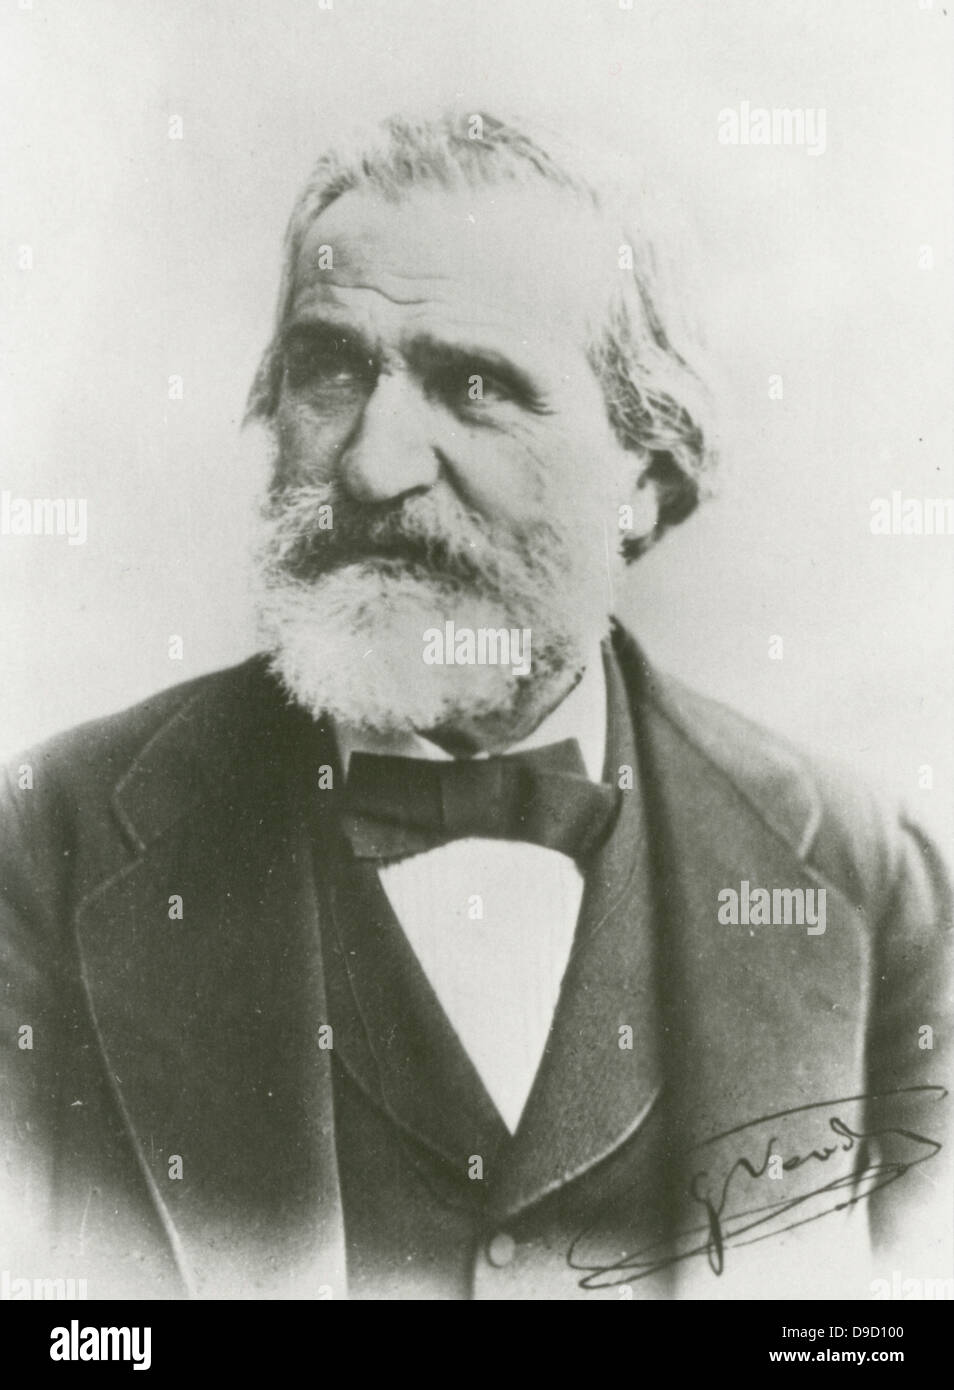 Giuseppe Verdi (1813-1901) italienischen romantischen Komponisten, dessen Opern standard-Repertoire in den Welten Operea sind beherbergt. Stockfoto